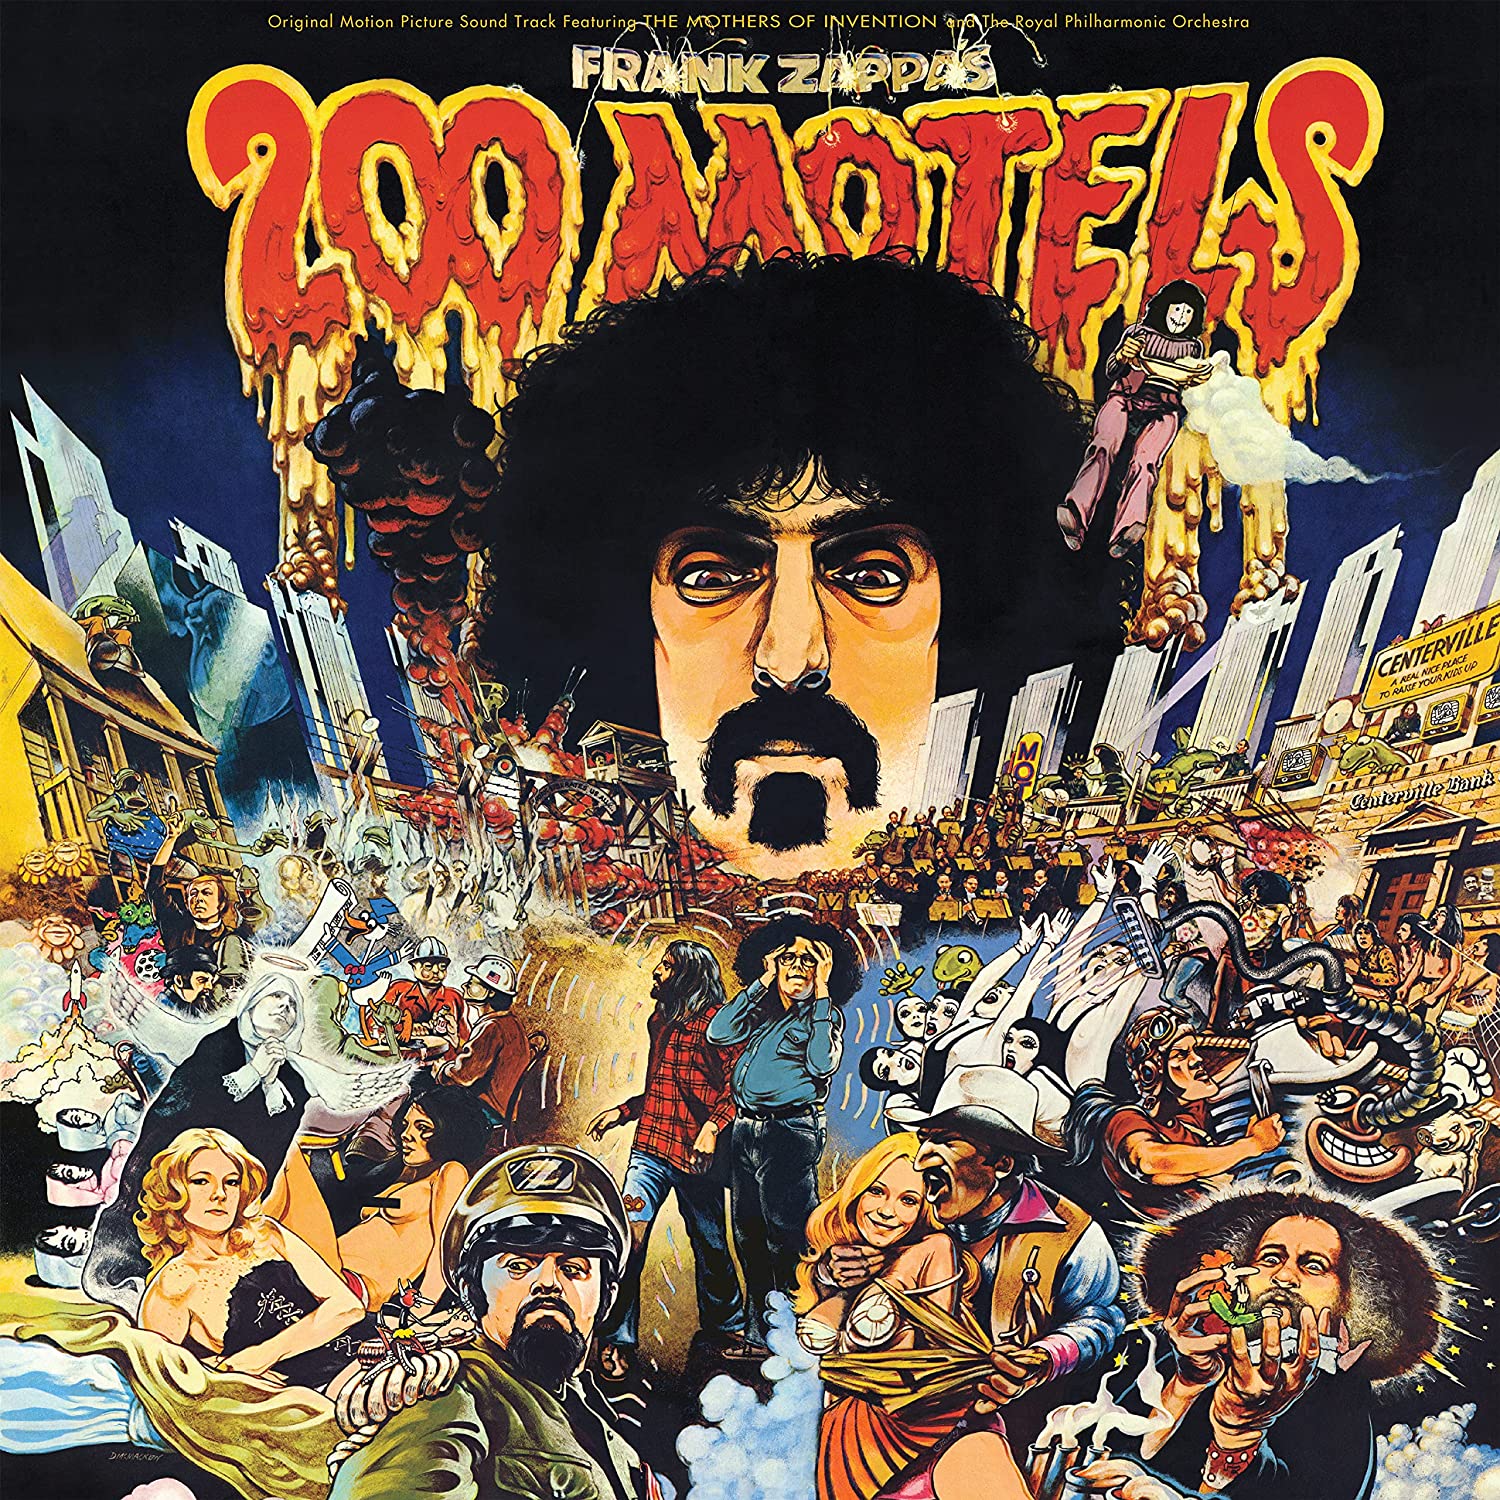 200 Motels - Soundtrack (50th Anniversary Edition)